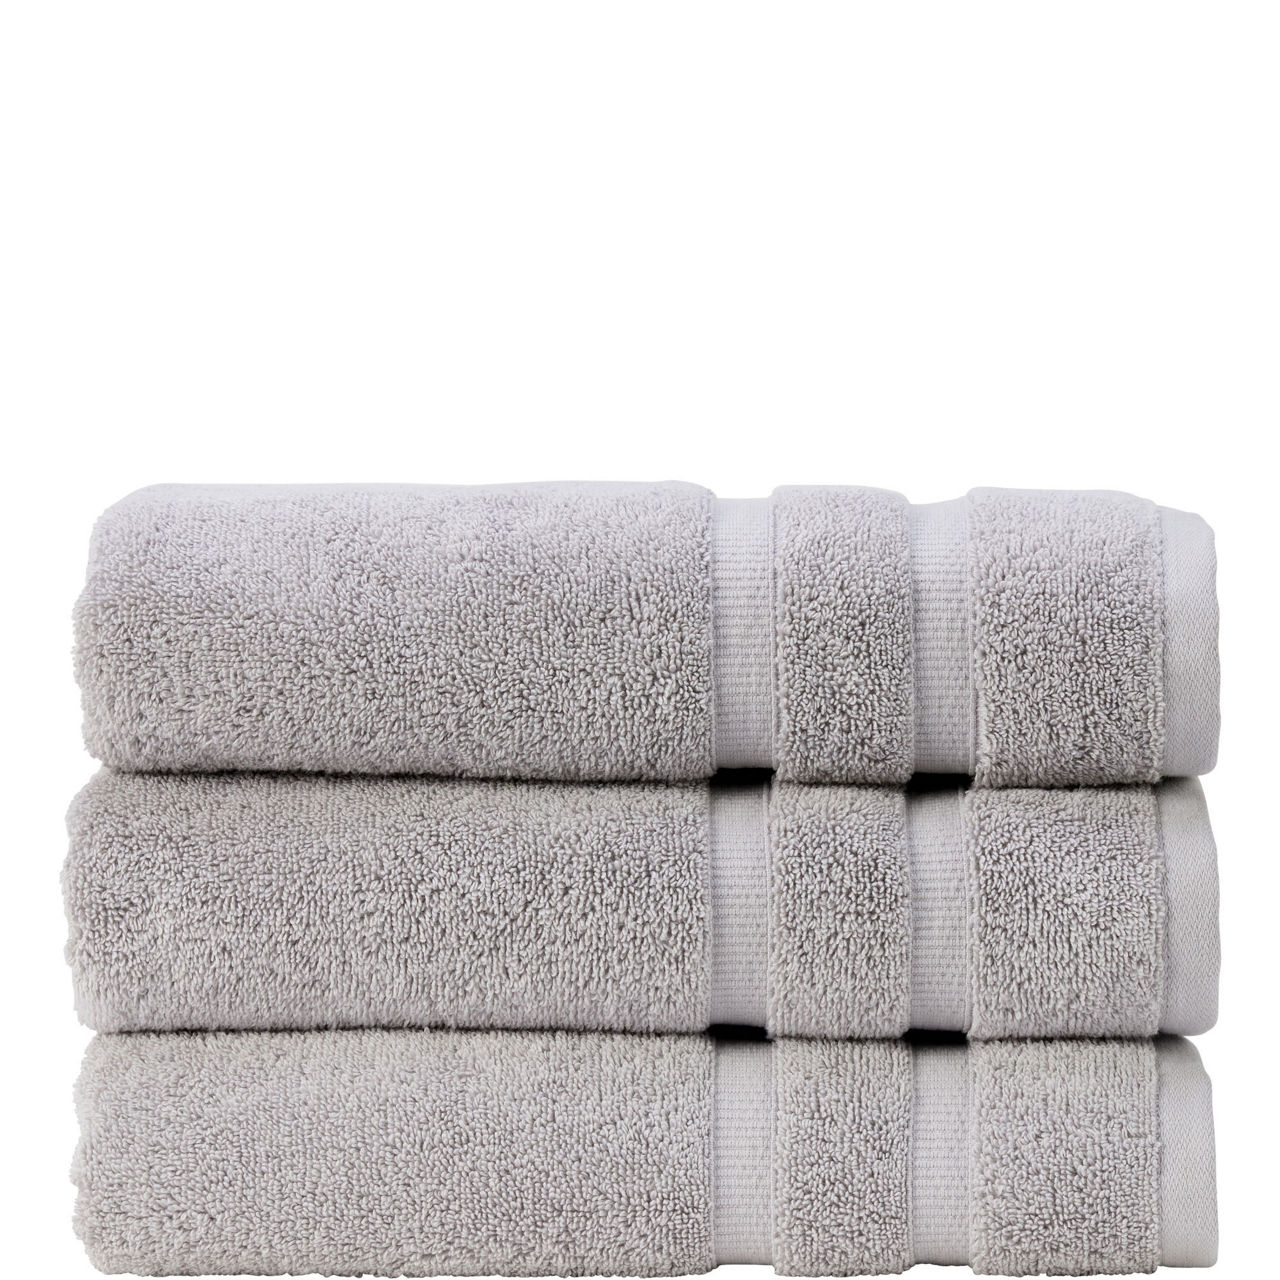 Hotel Style 70L x 30W Egyptian Cotton Bath Sheets, Platinum Silver, 2 Pack, Size: 2 Piece Bath Sheet Set